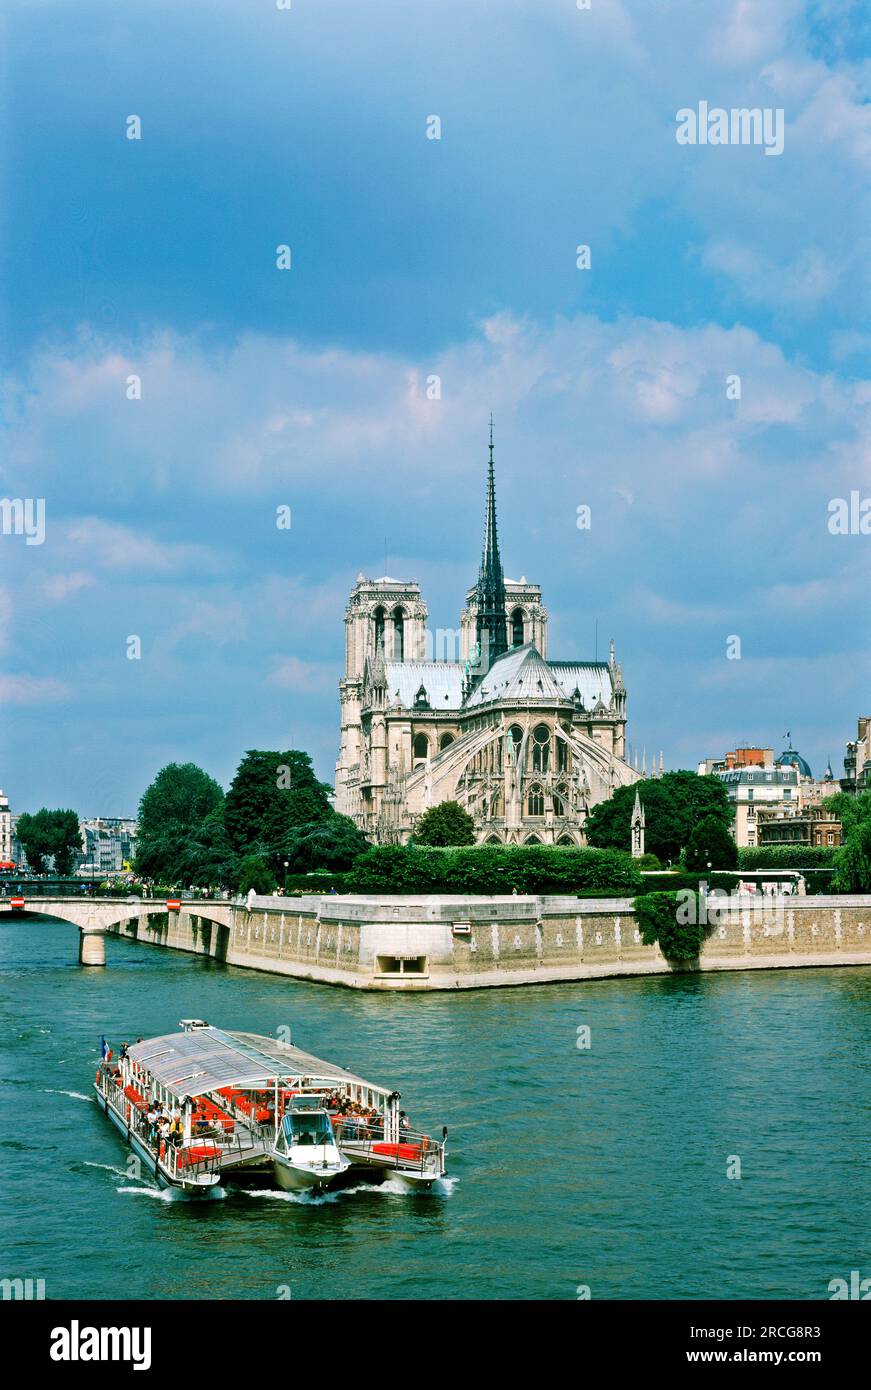 Boat on river near Notre Dame, Paris, France Stock Photo